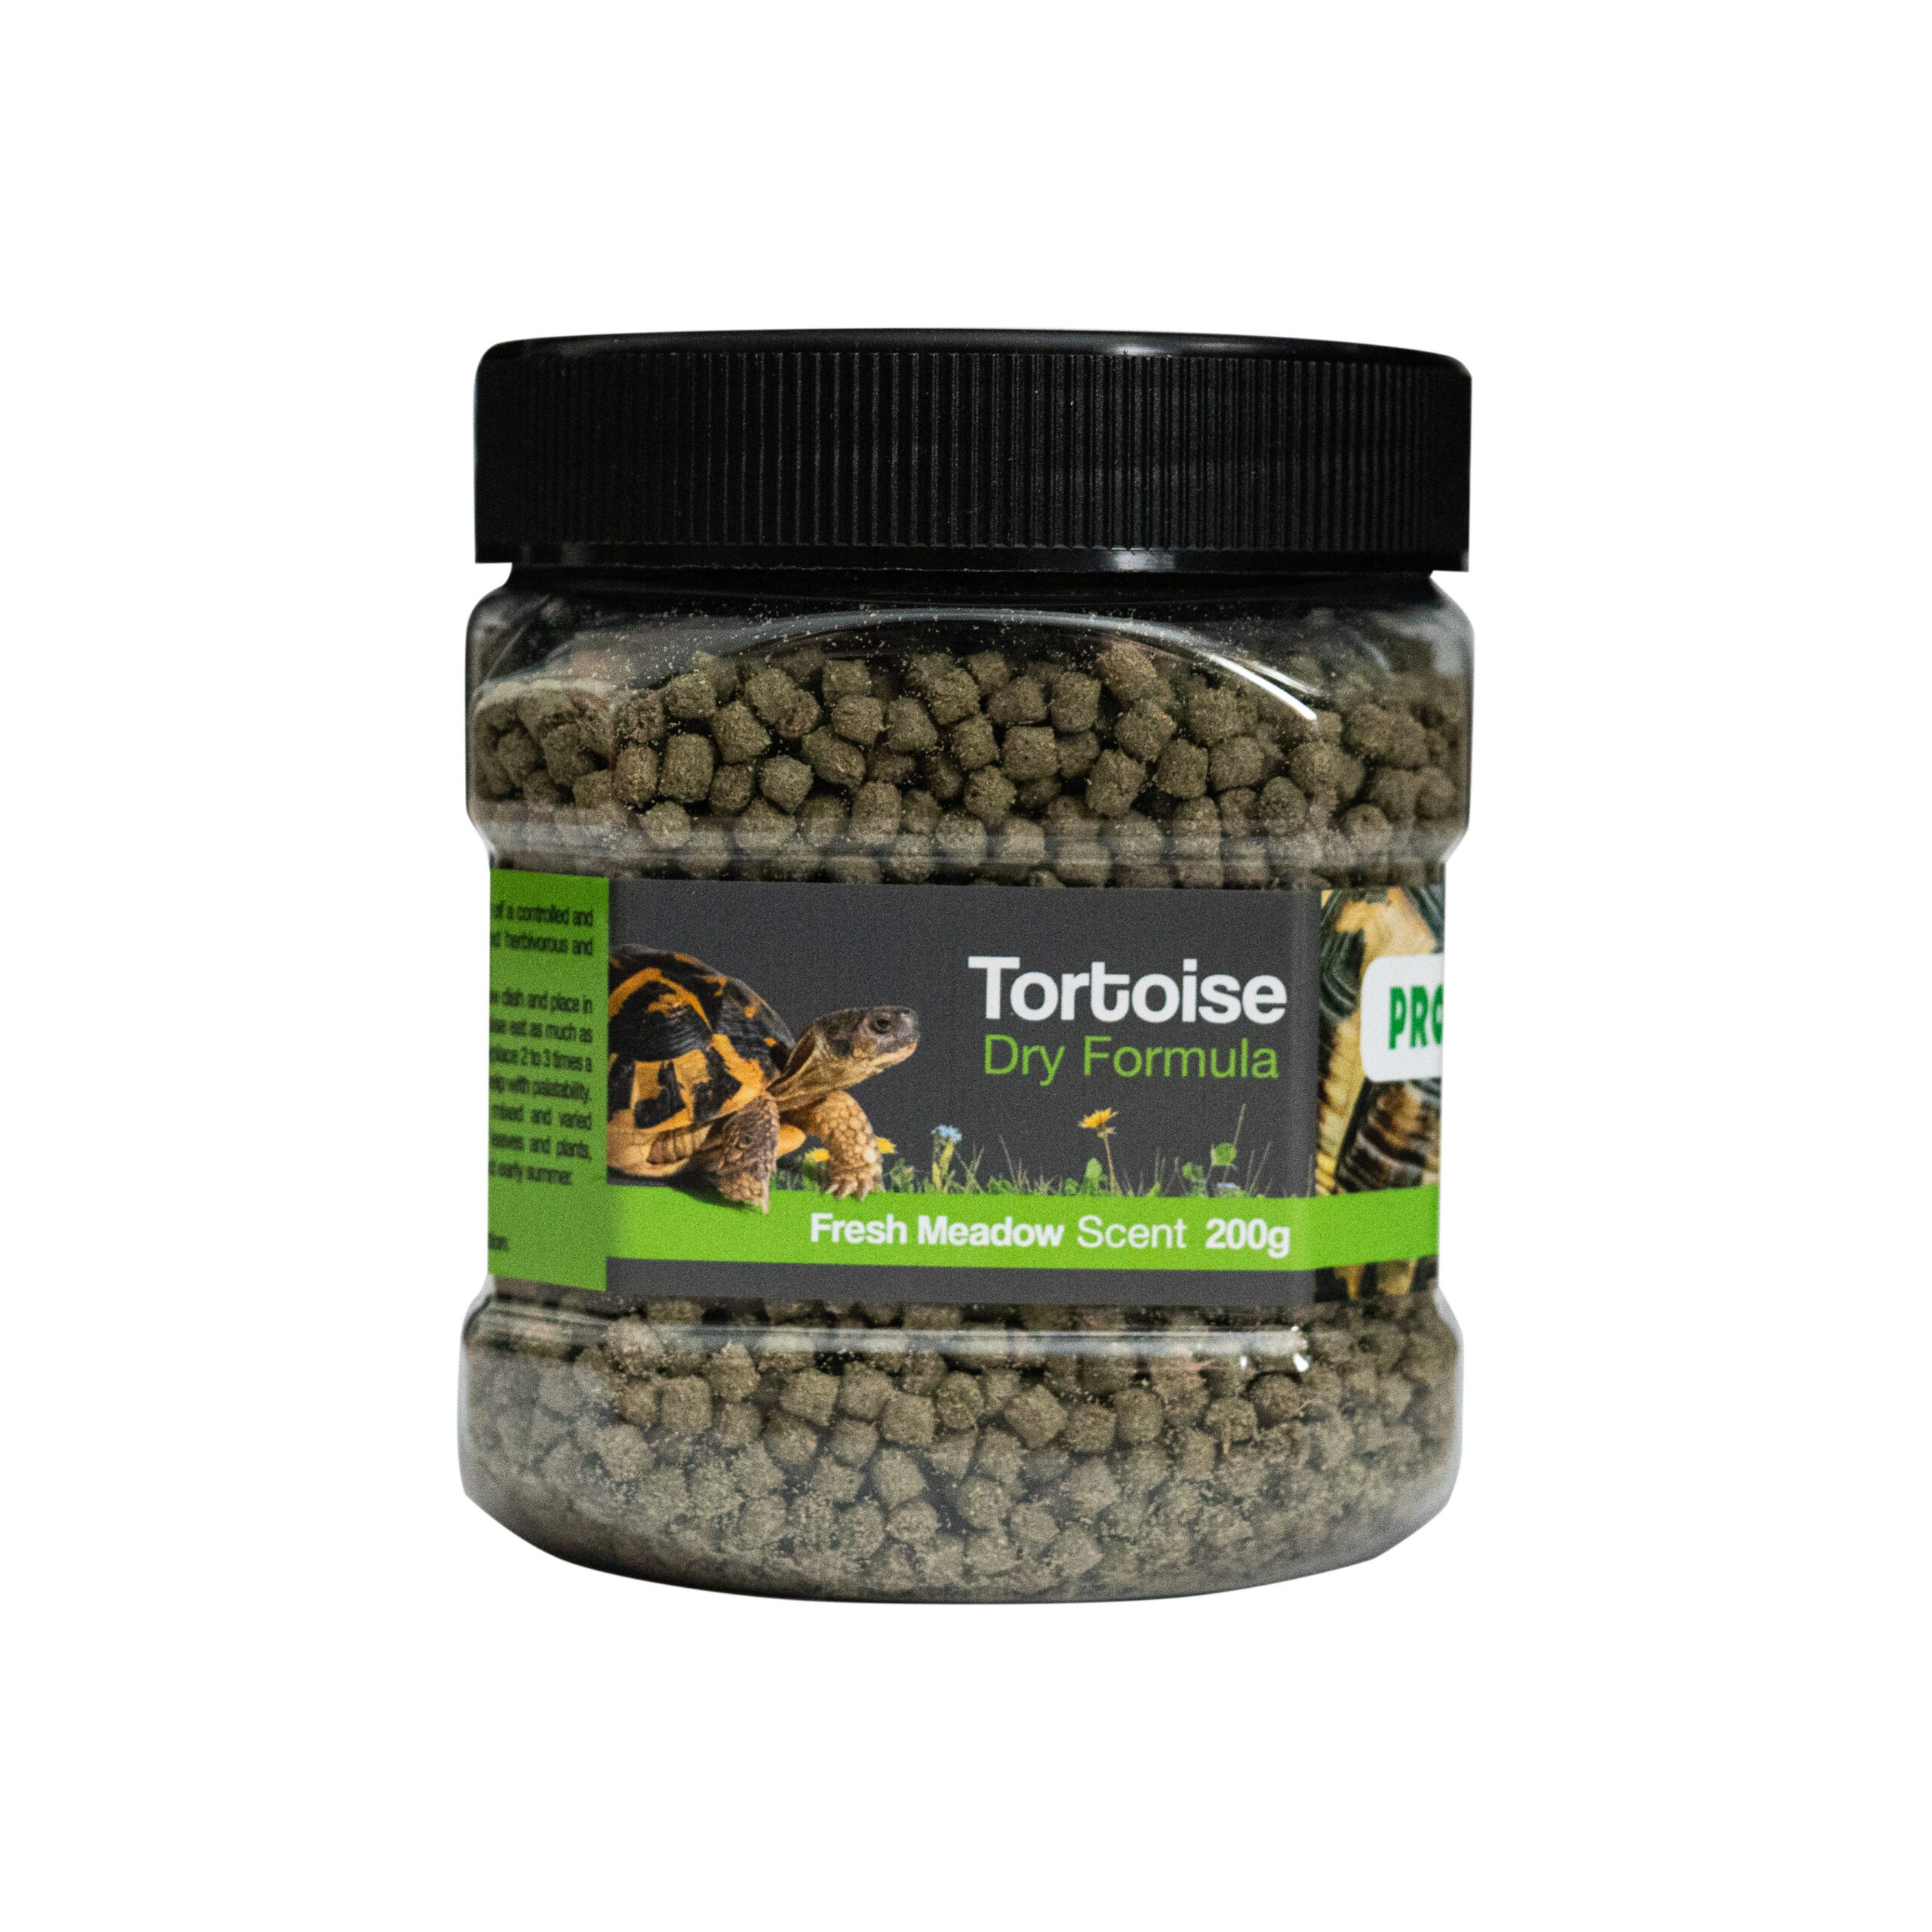 Pro Rep Tortoise Dry Formula, Fresh Meadow Scent 200g